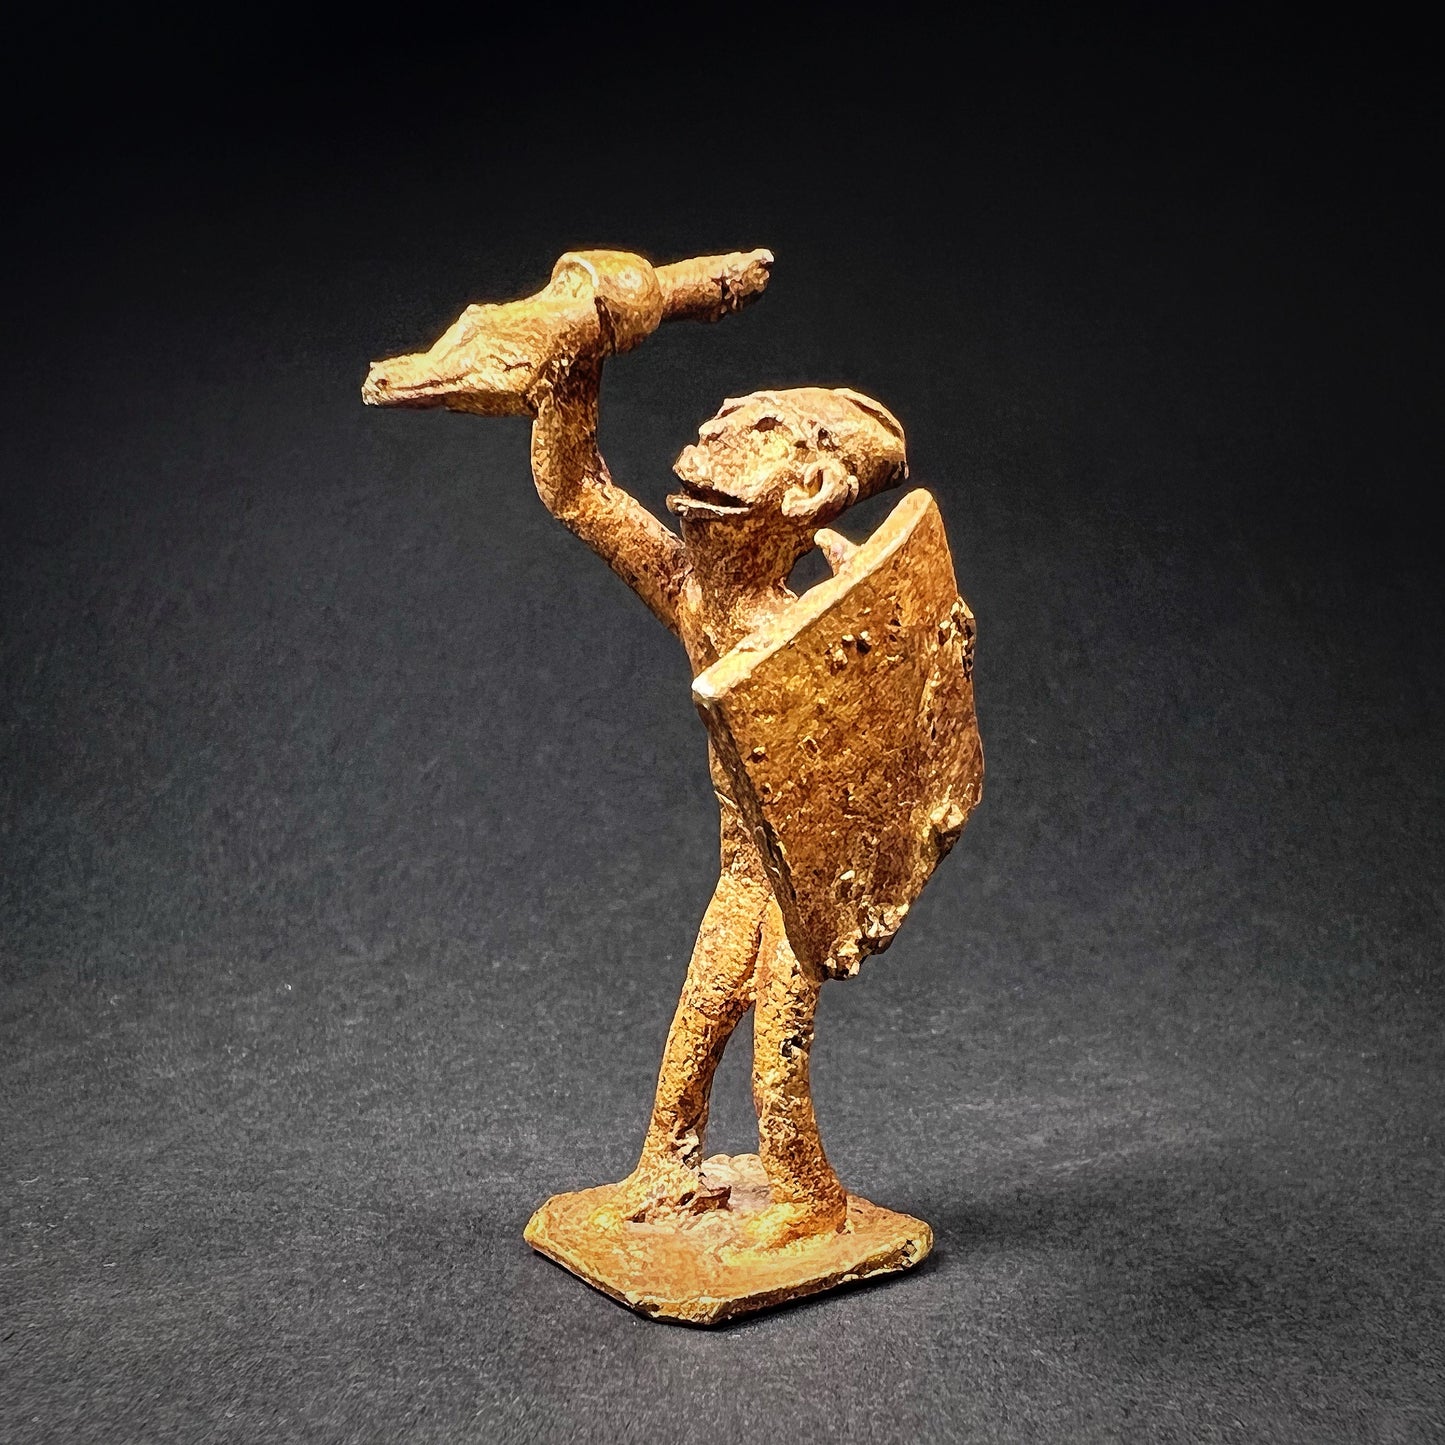 Asanti warrior statue - gold weight.